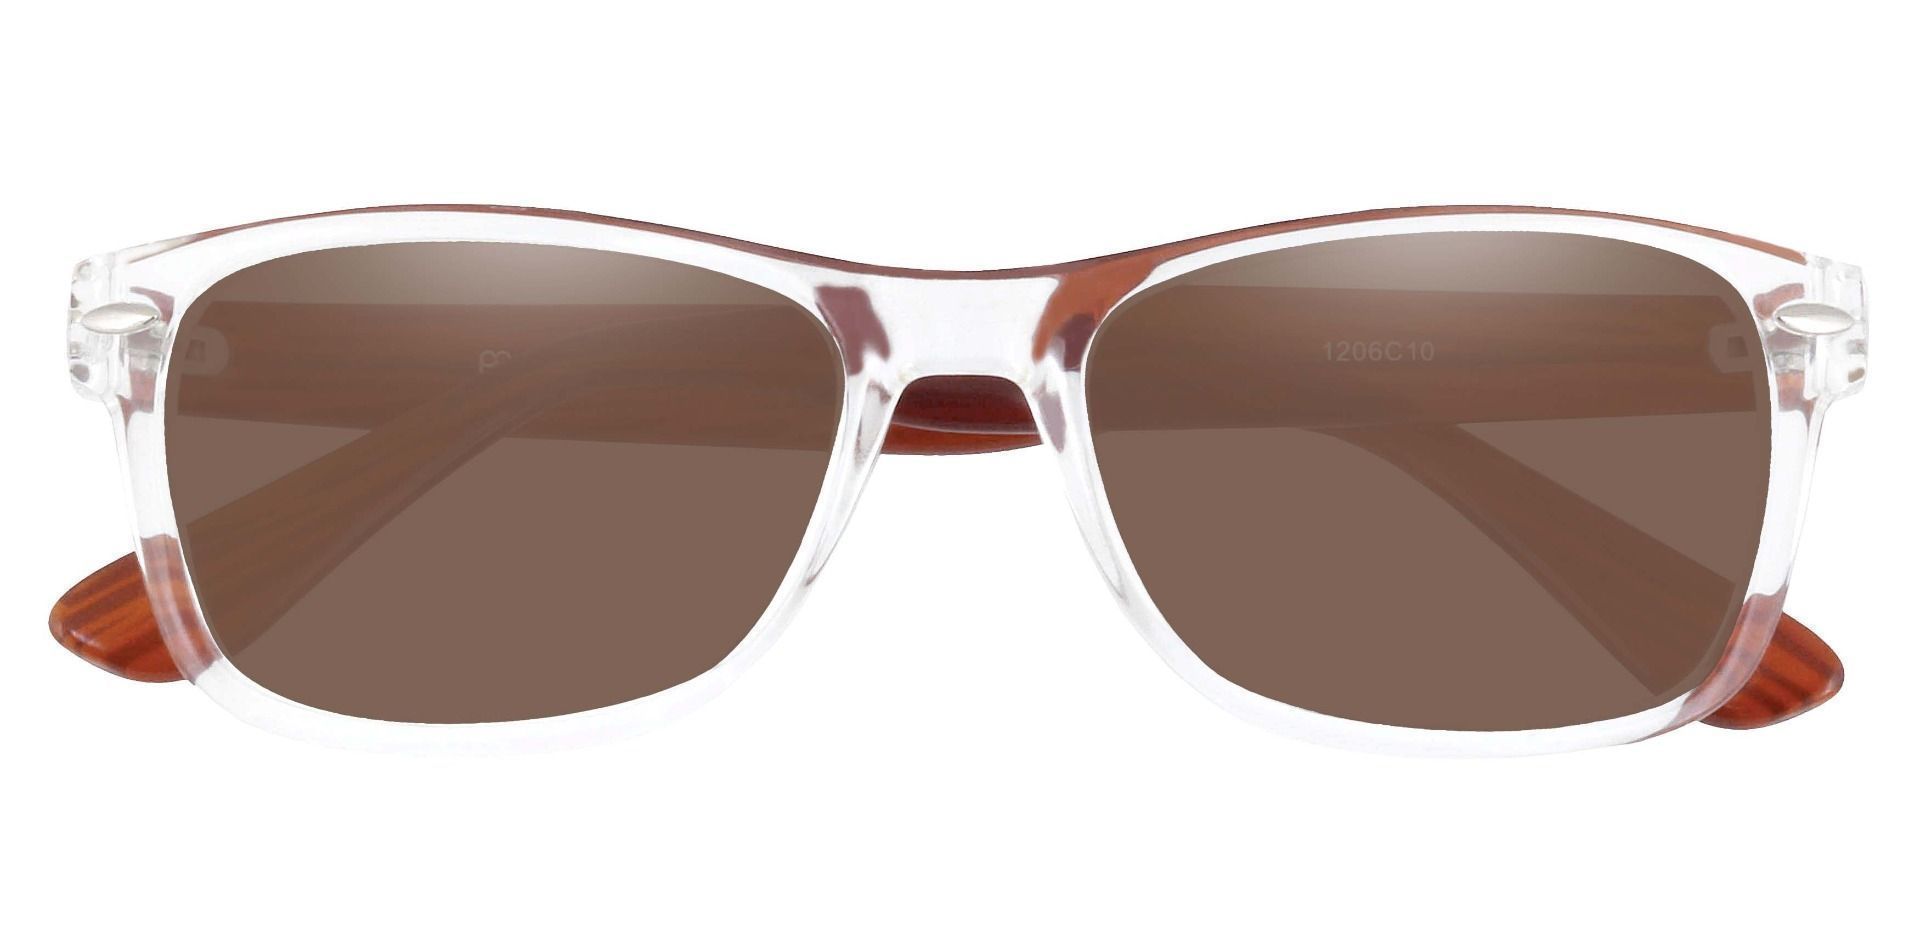 Kent Rectangle Prescription Sunglasses - Clear Frame With Brown Lenses